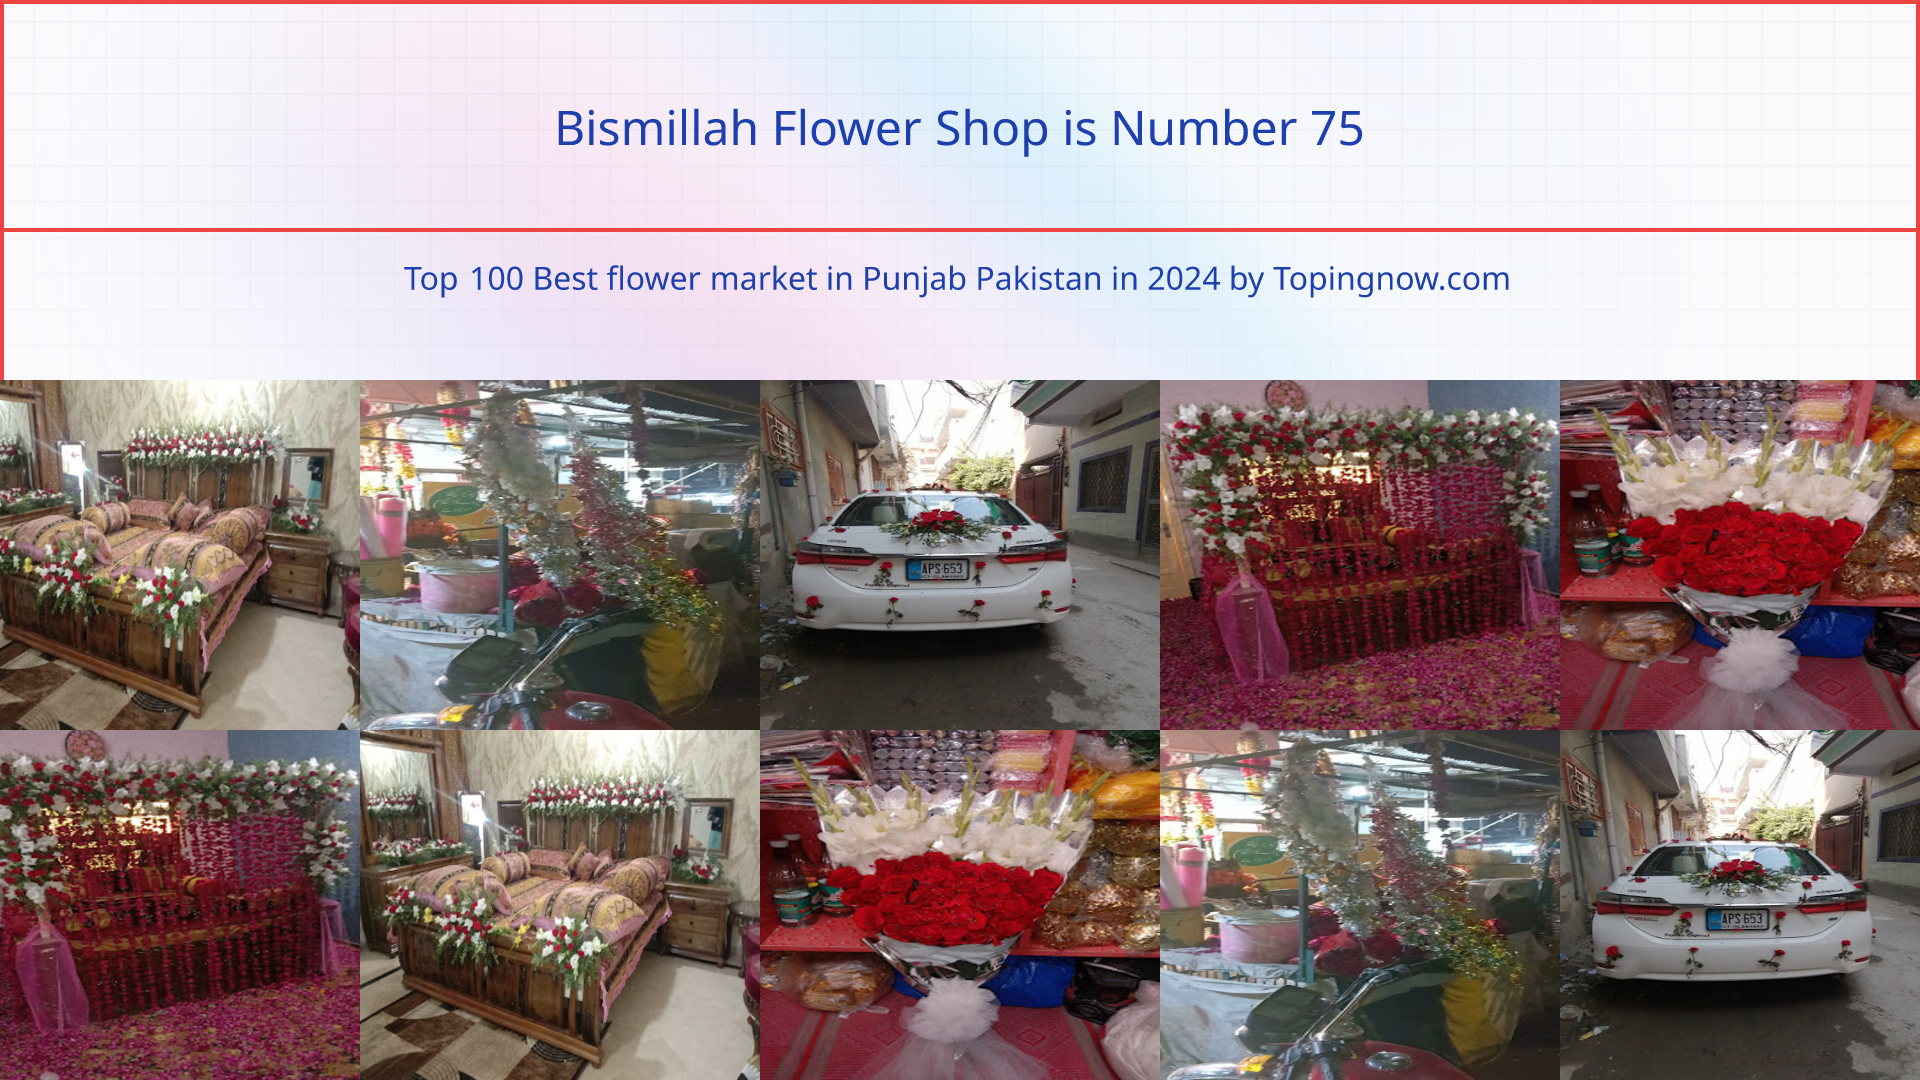 Bismillah Flower Shop: Top 100 Best flower market in Punjab Pakistan in 2024